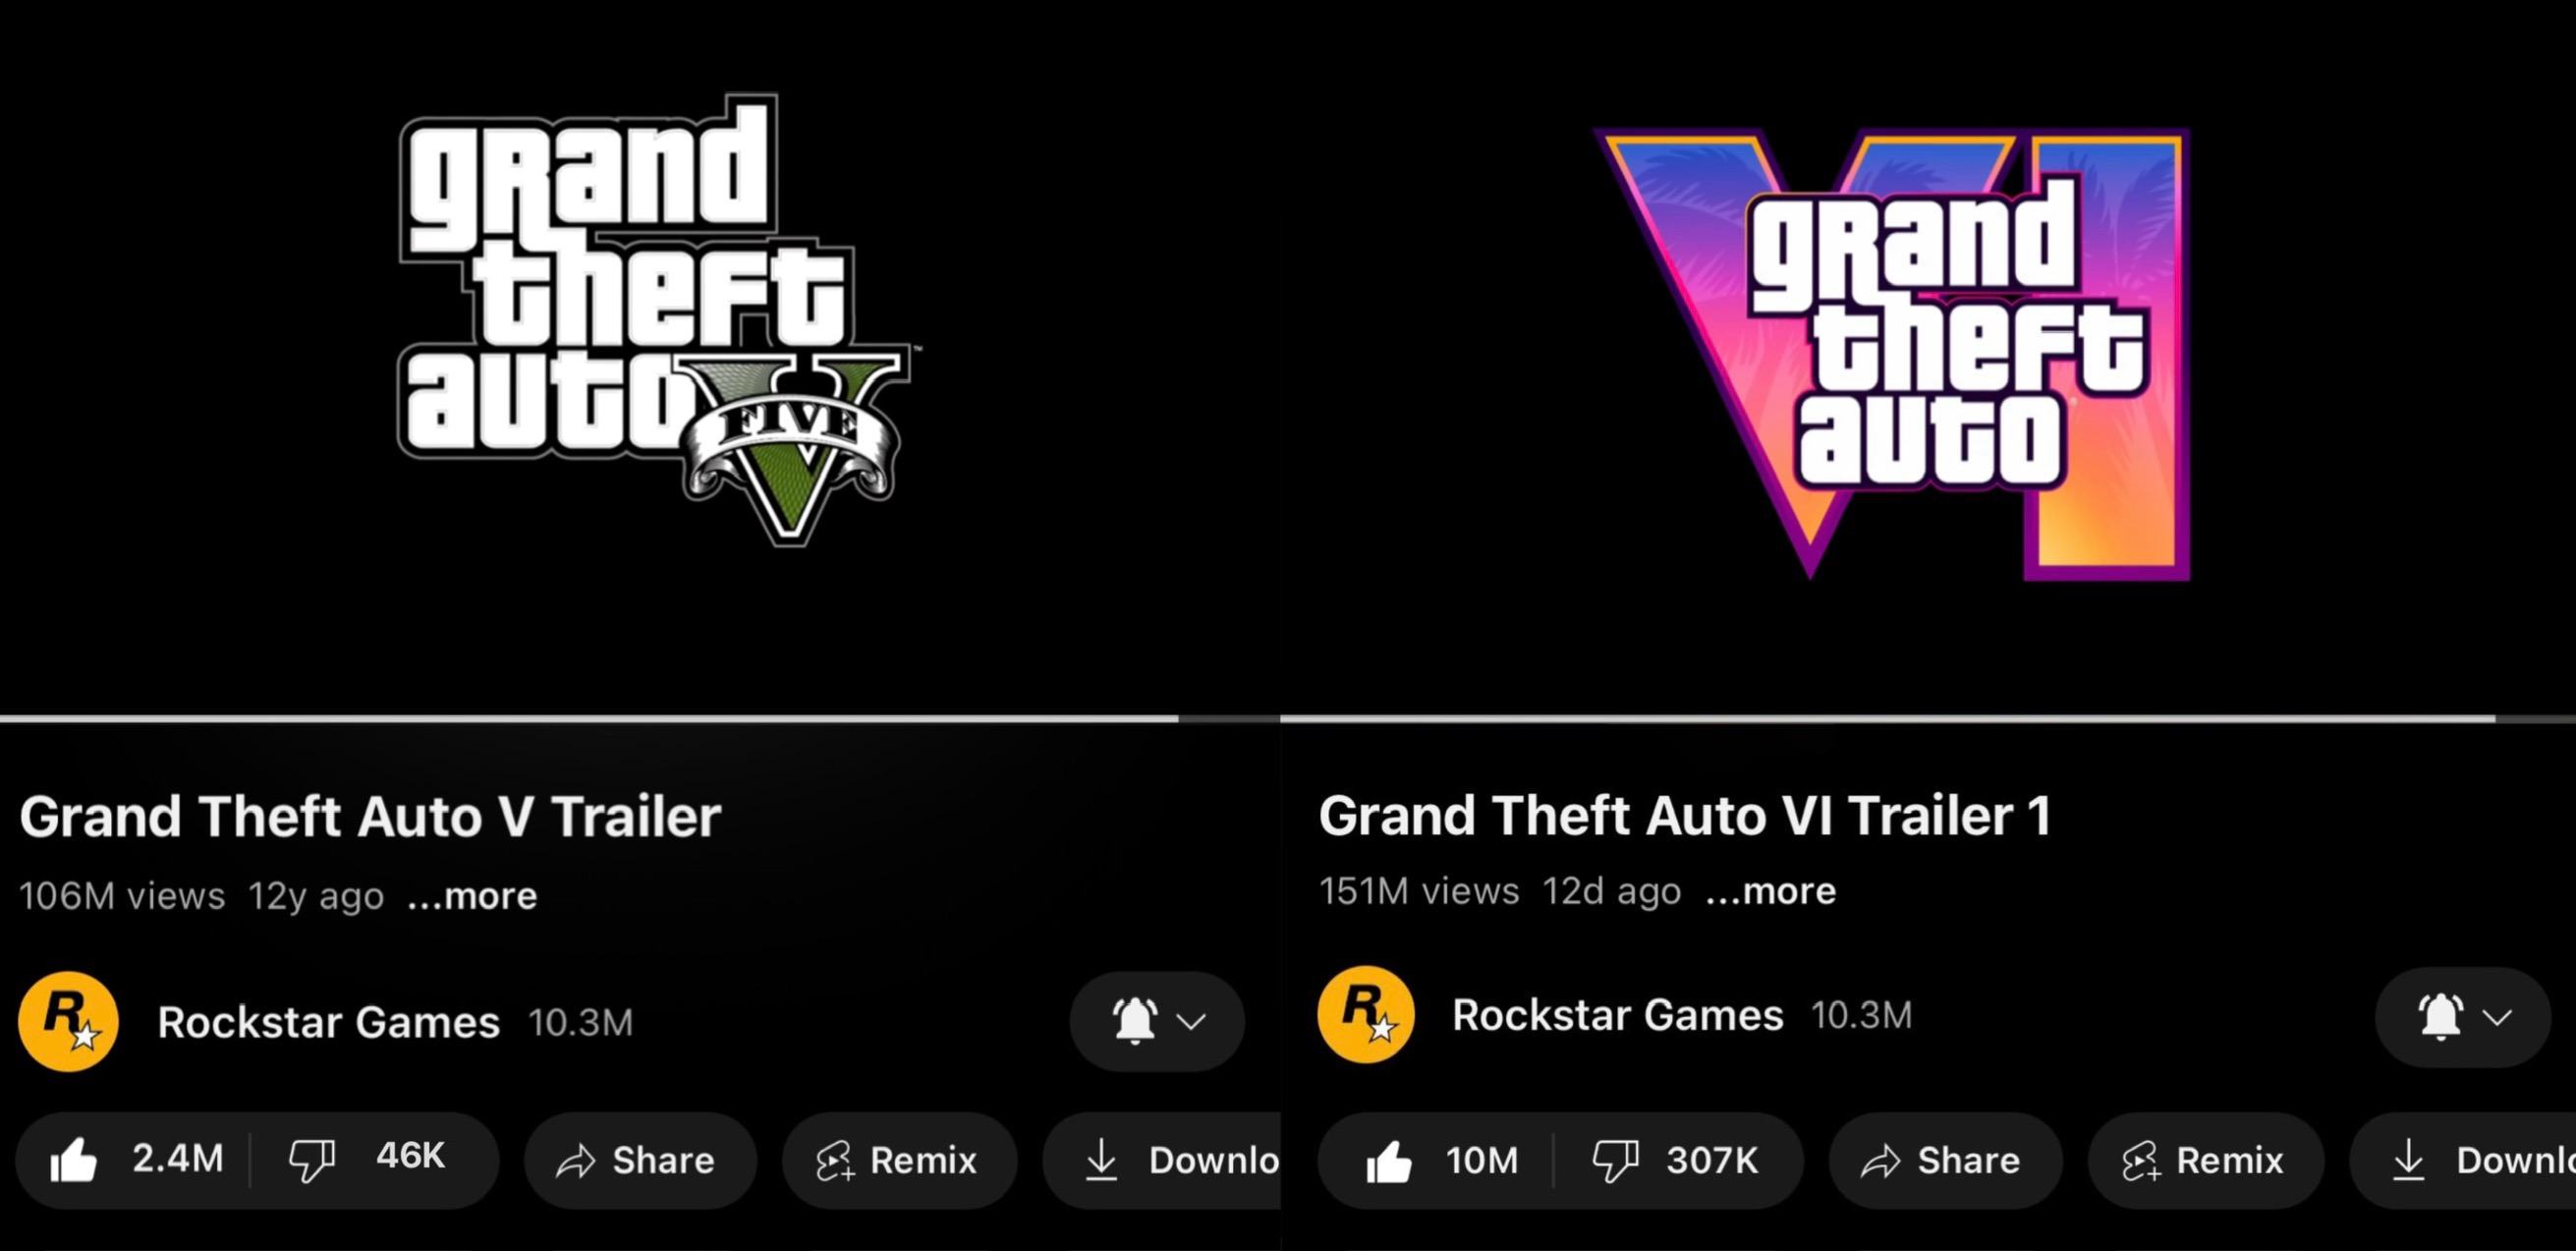 GTA 6 Trailer Countdown ⏳ on X: GTA 6 has been in development